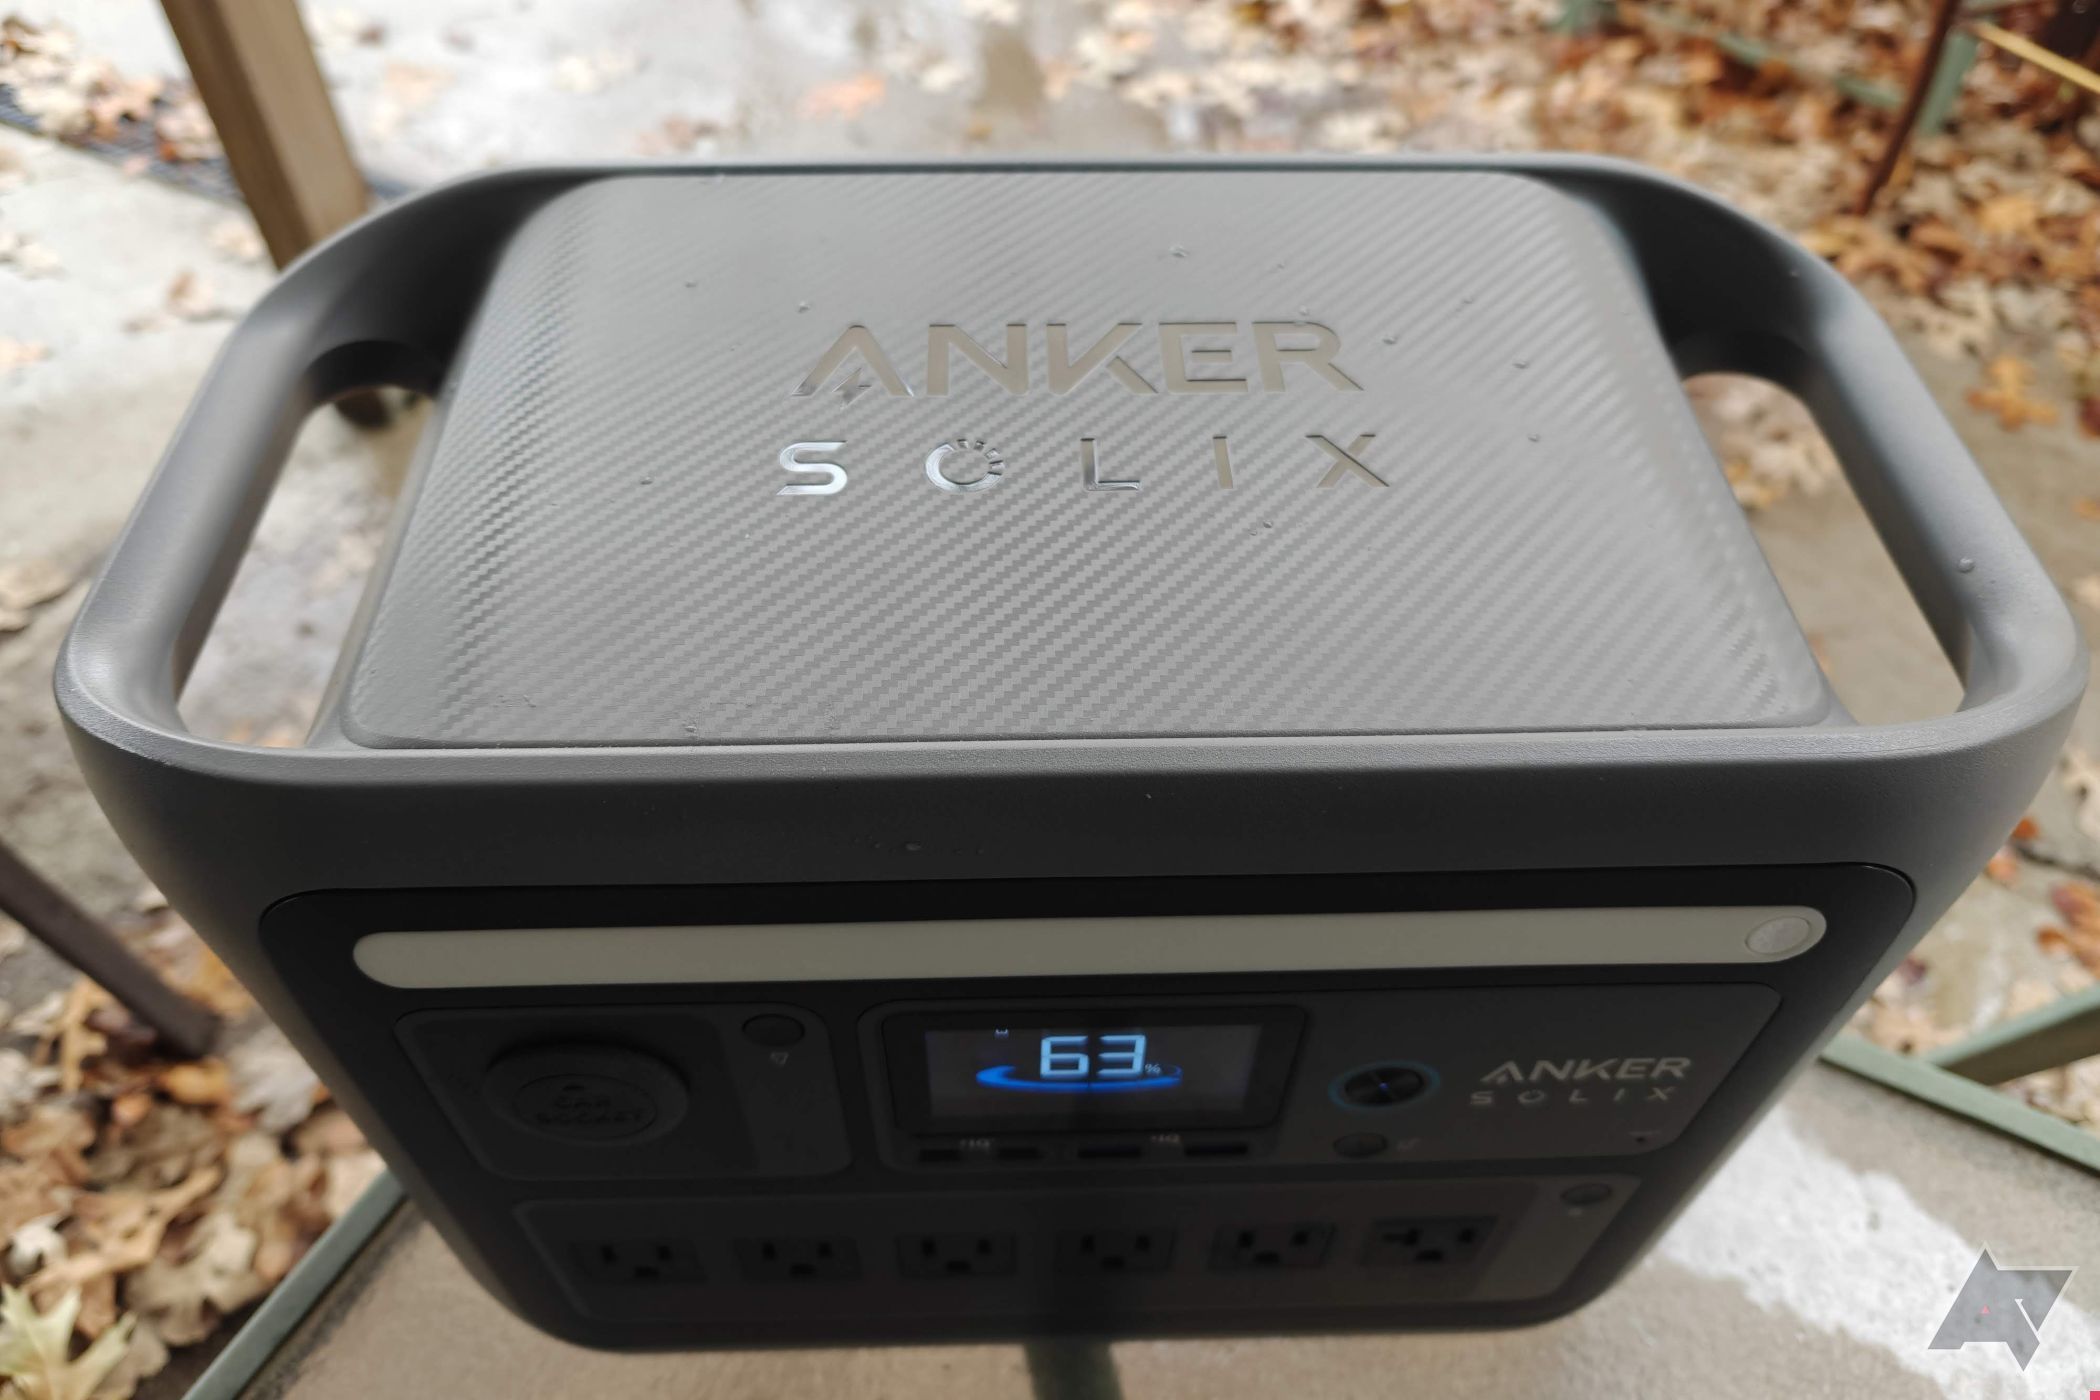 Parte superior do Anker Solix C1000 